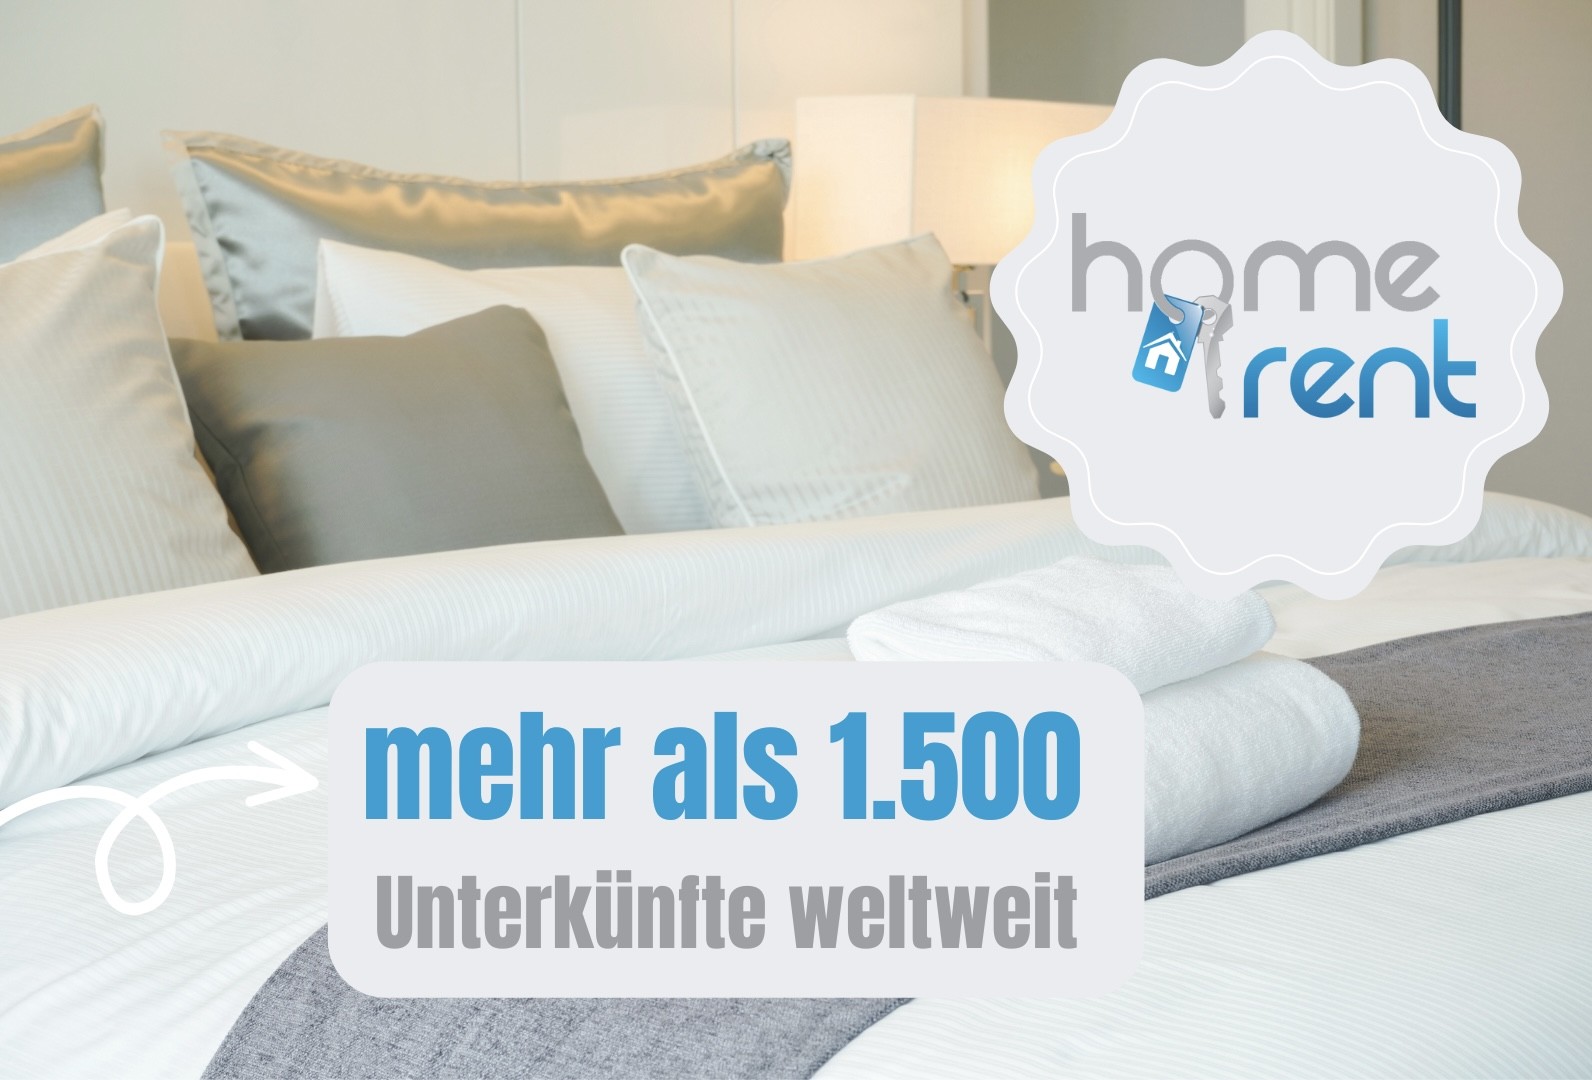 Monteurunterkunft HomeRent in Bernau bei Berlin, Eberswalde &amp; Joachimsthal Homerent Immobilien GmbH 16321 1714056343_662a6c973ef5f